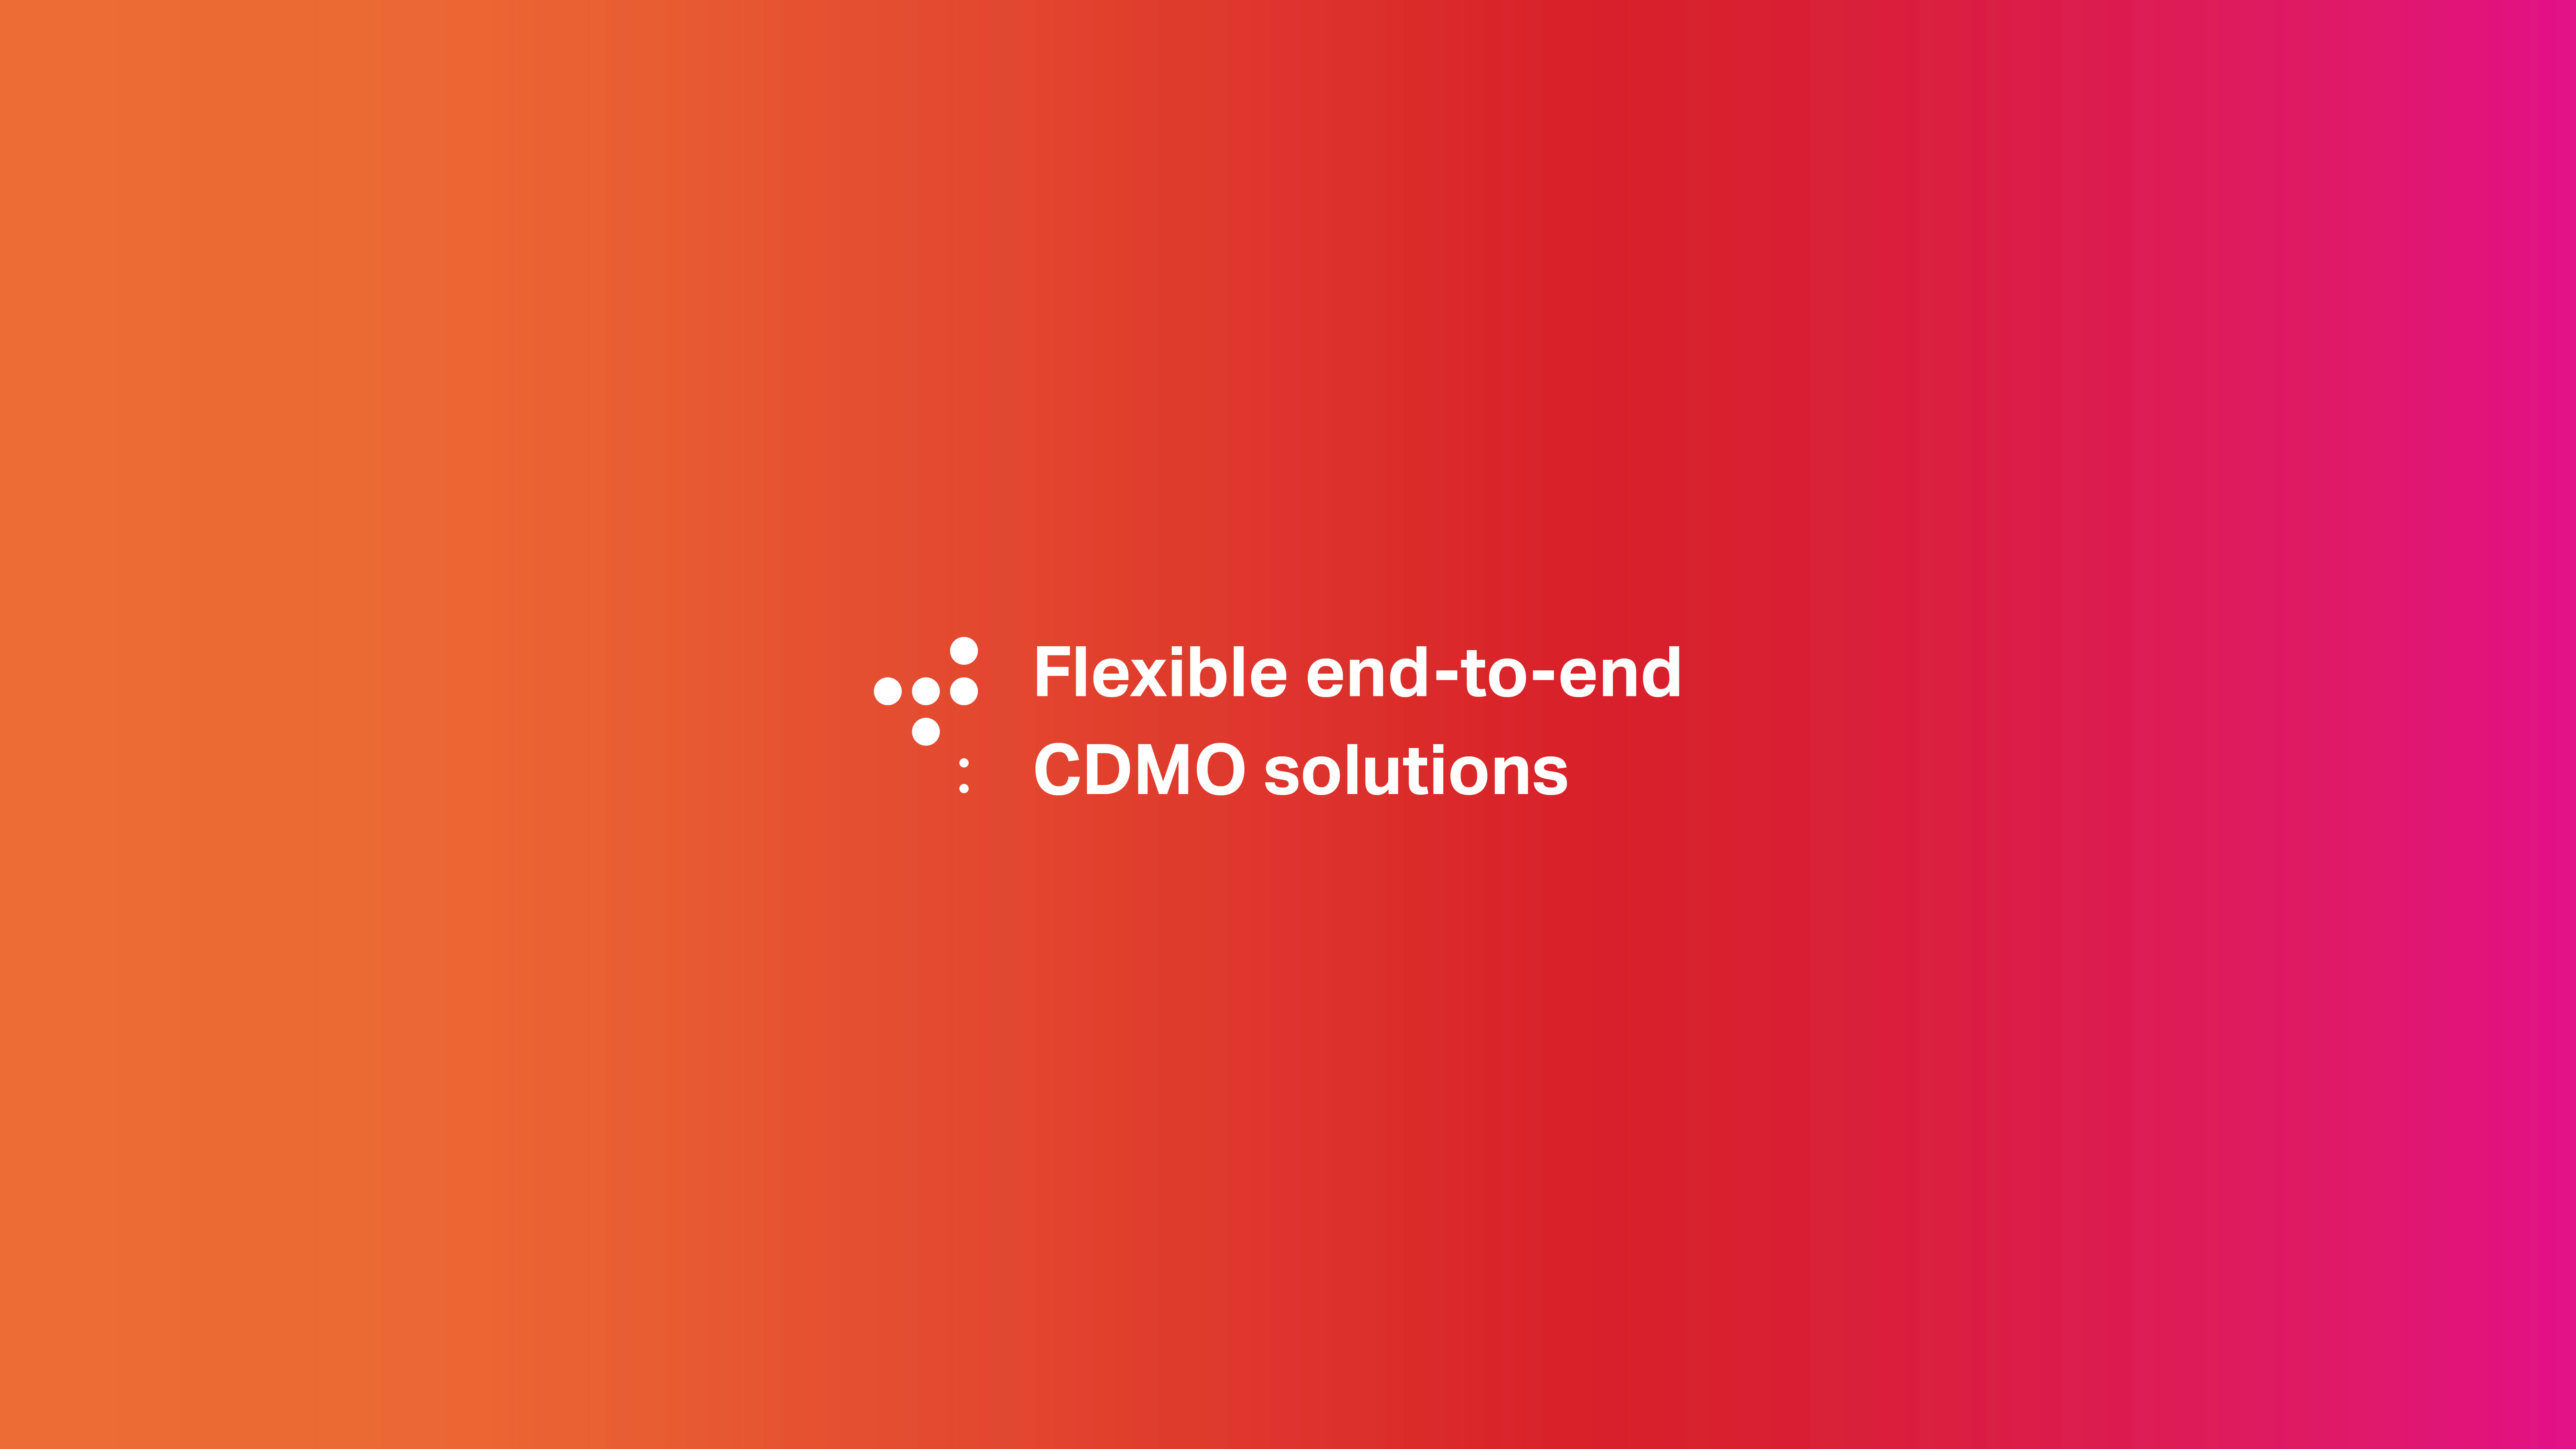 Flexibile end-to-end CDMO solutions